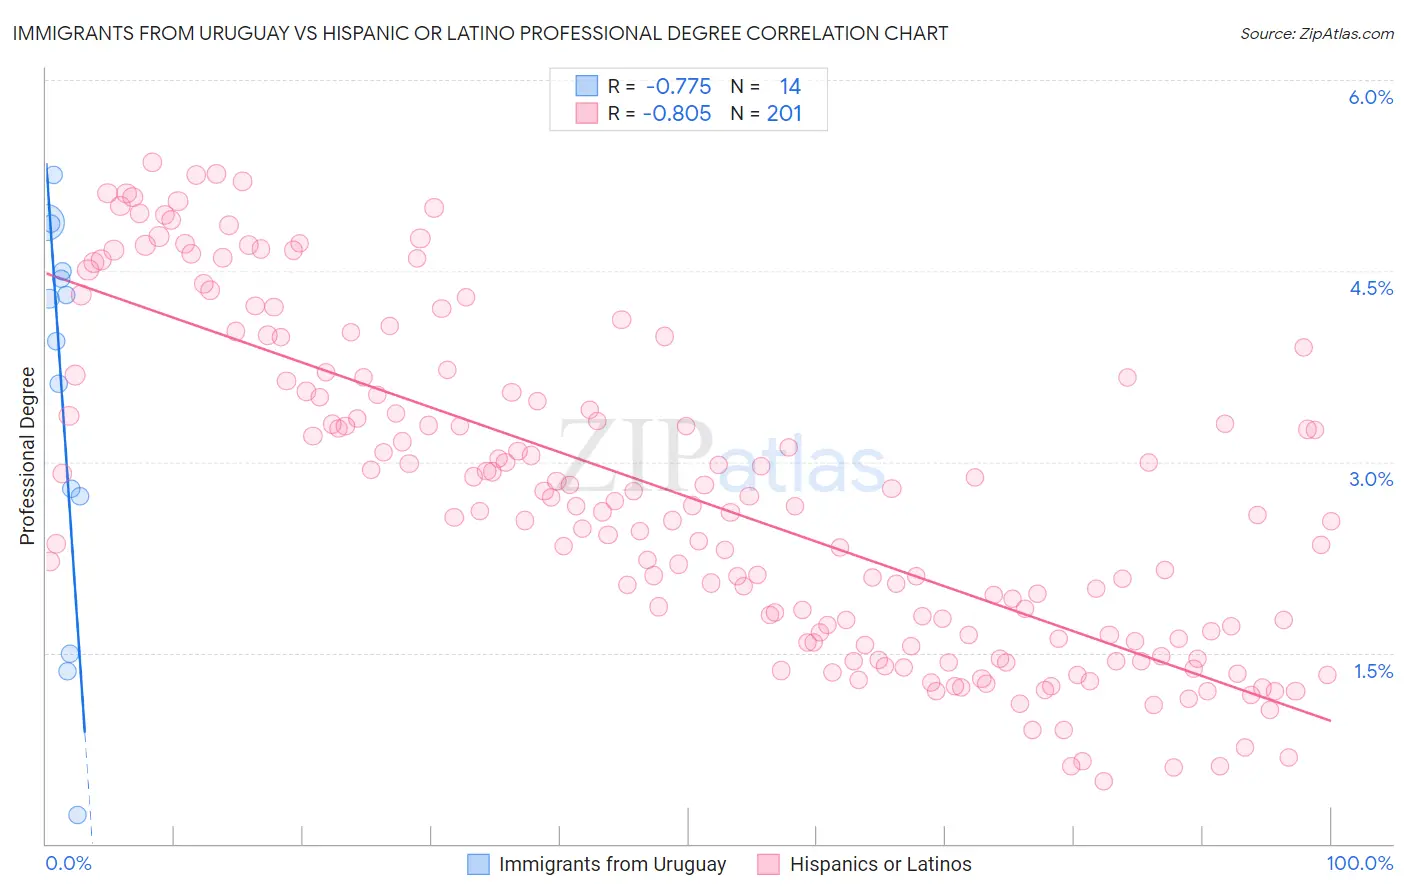 Immigrants from Uruguay vs Hispanic or Latino Professional Degree